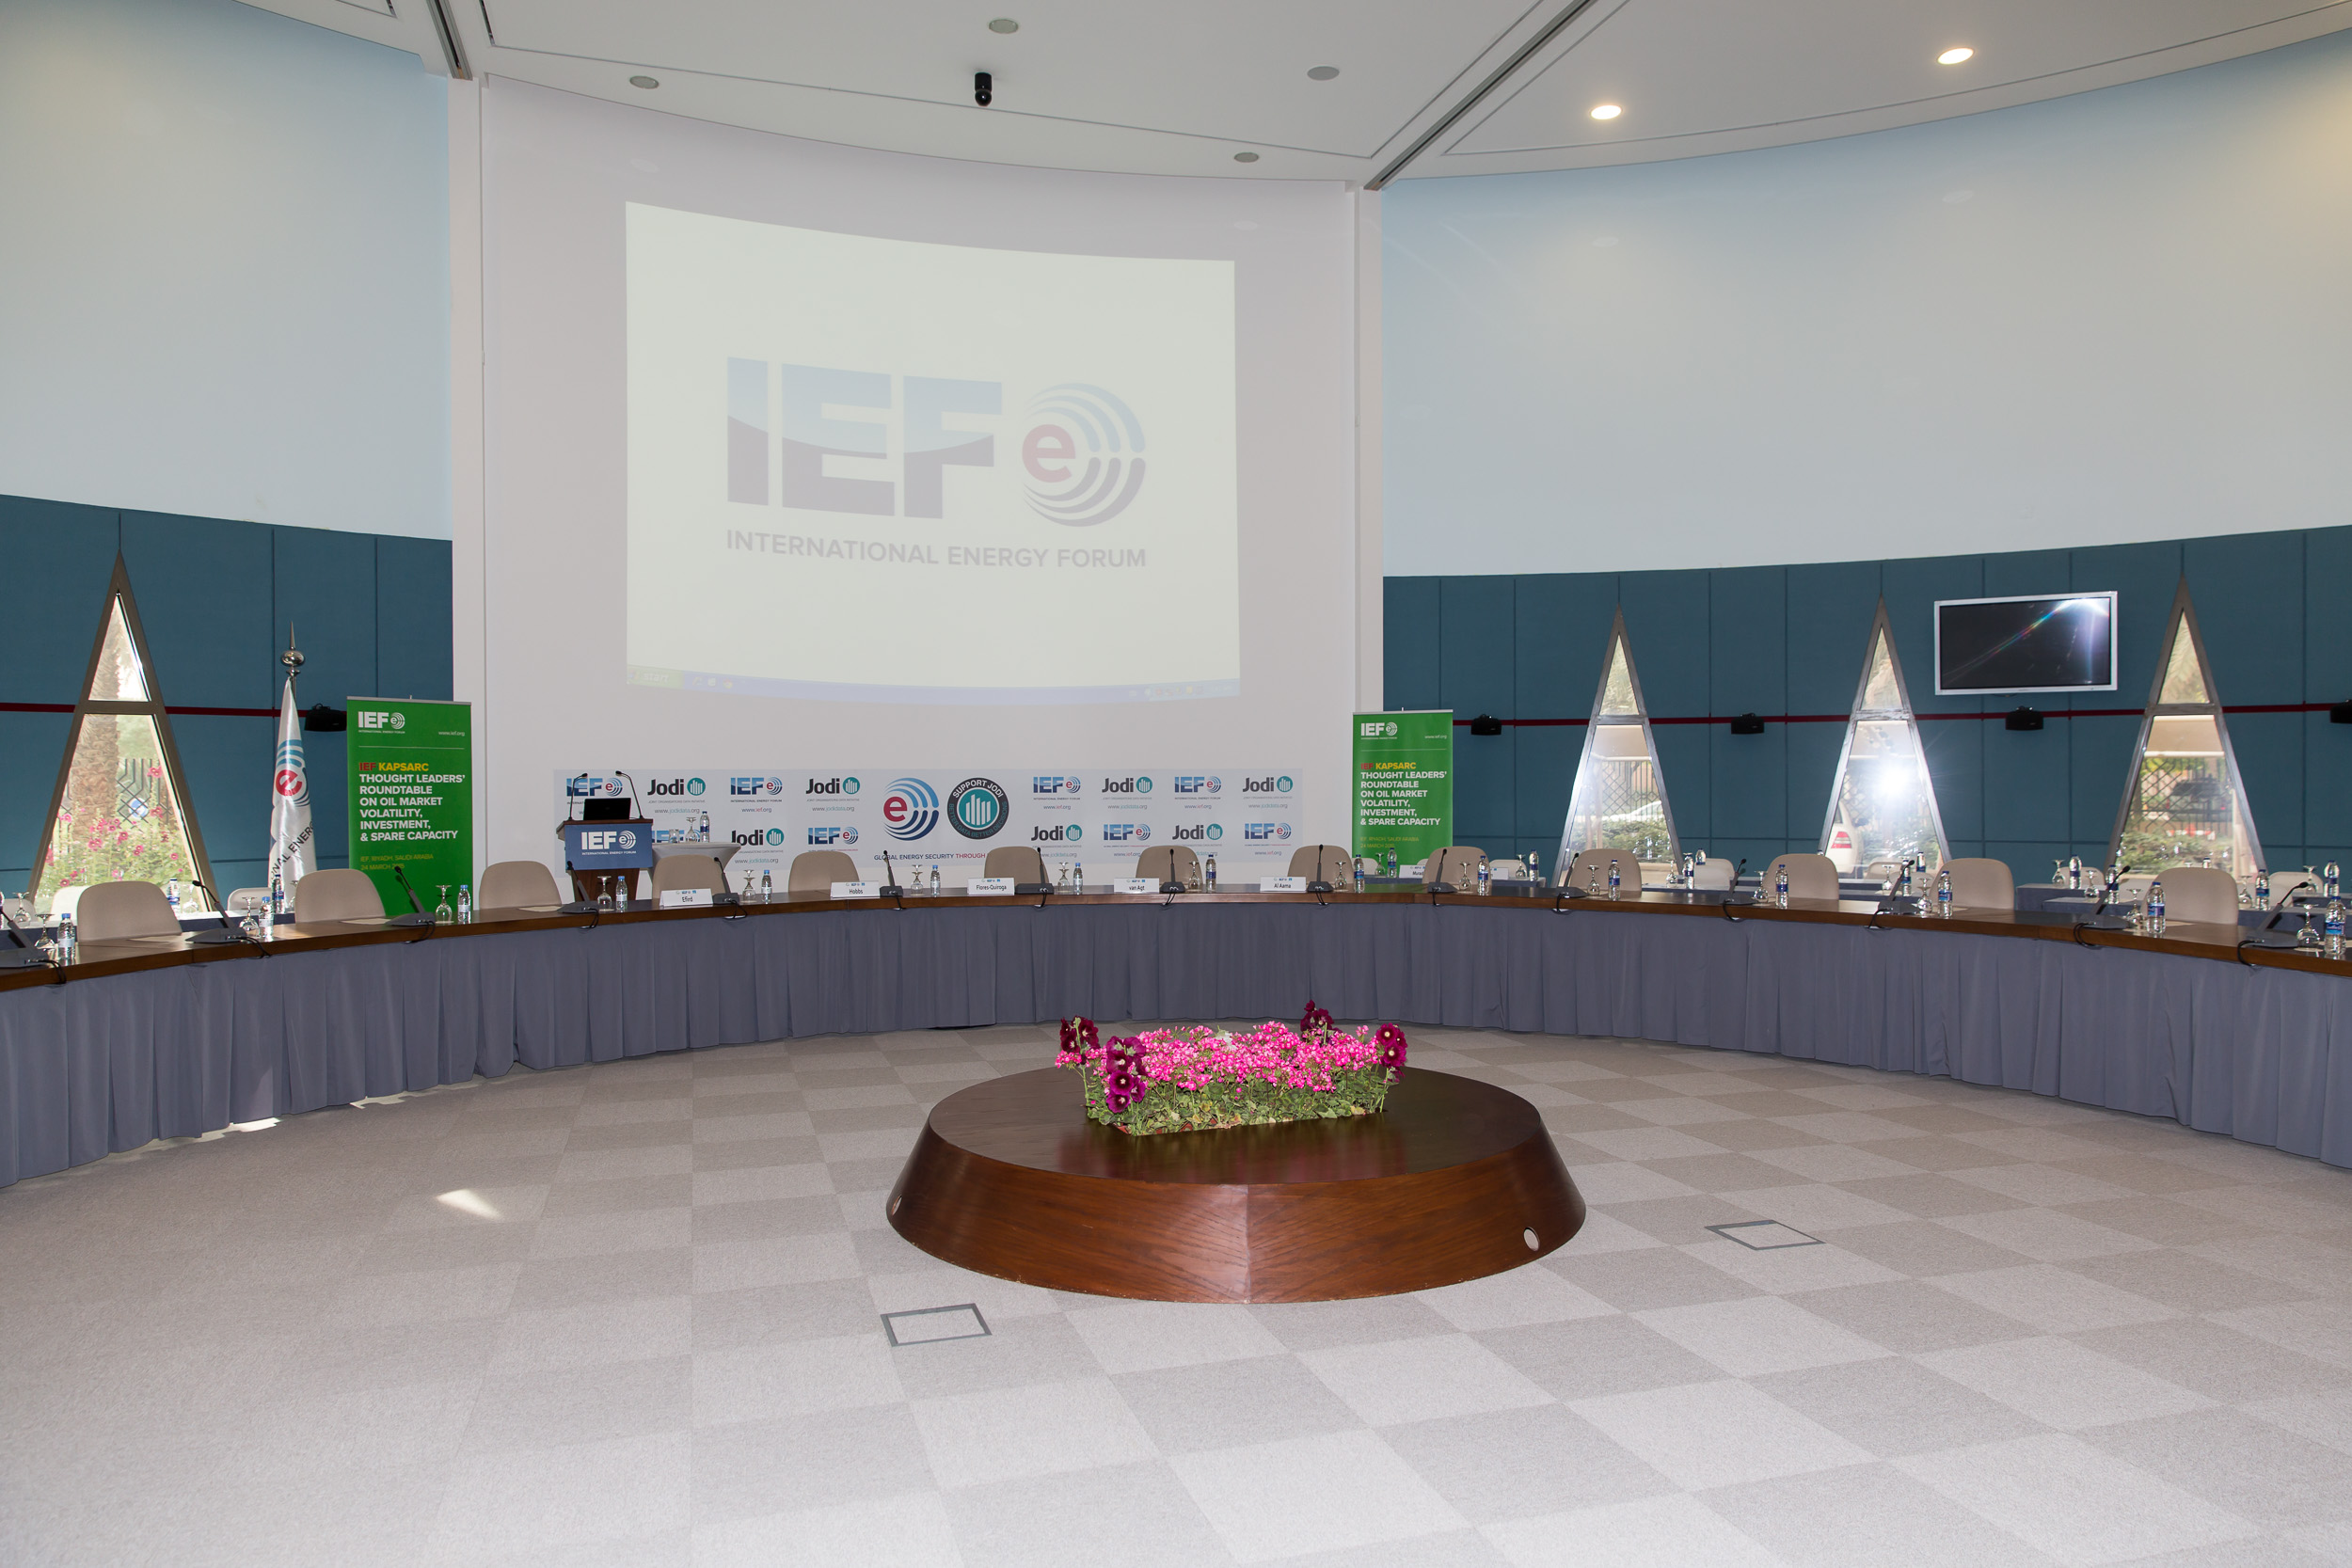 IEA IEF OPEC Symposium_24001